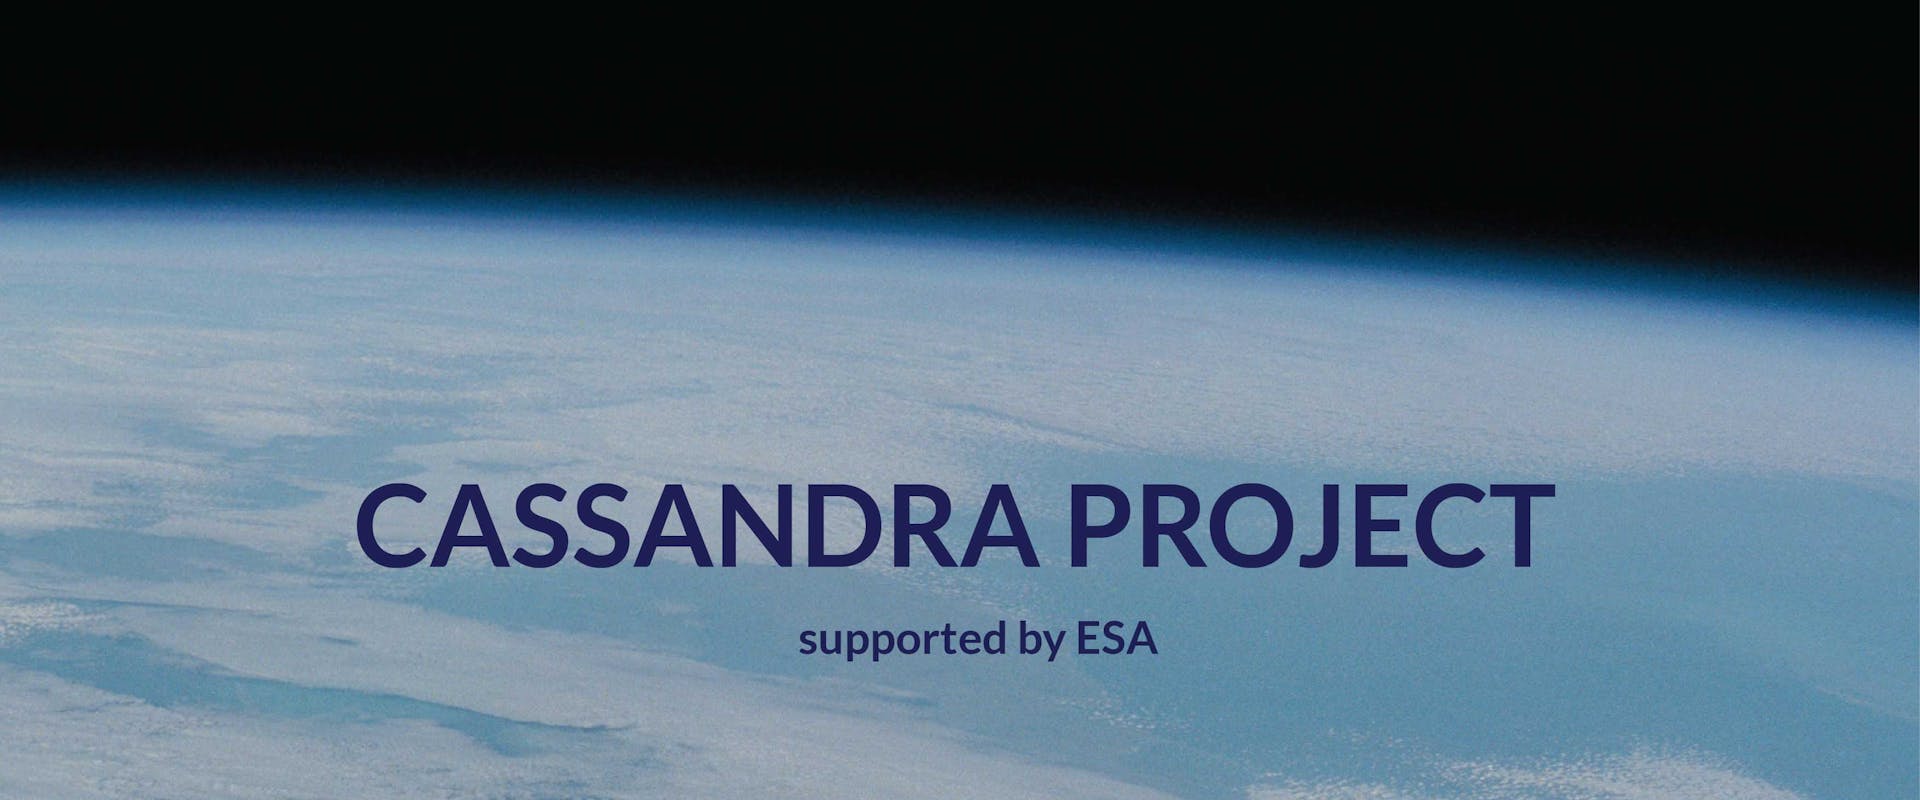 Cassandra Project